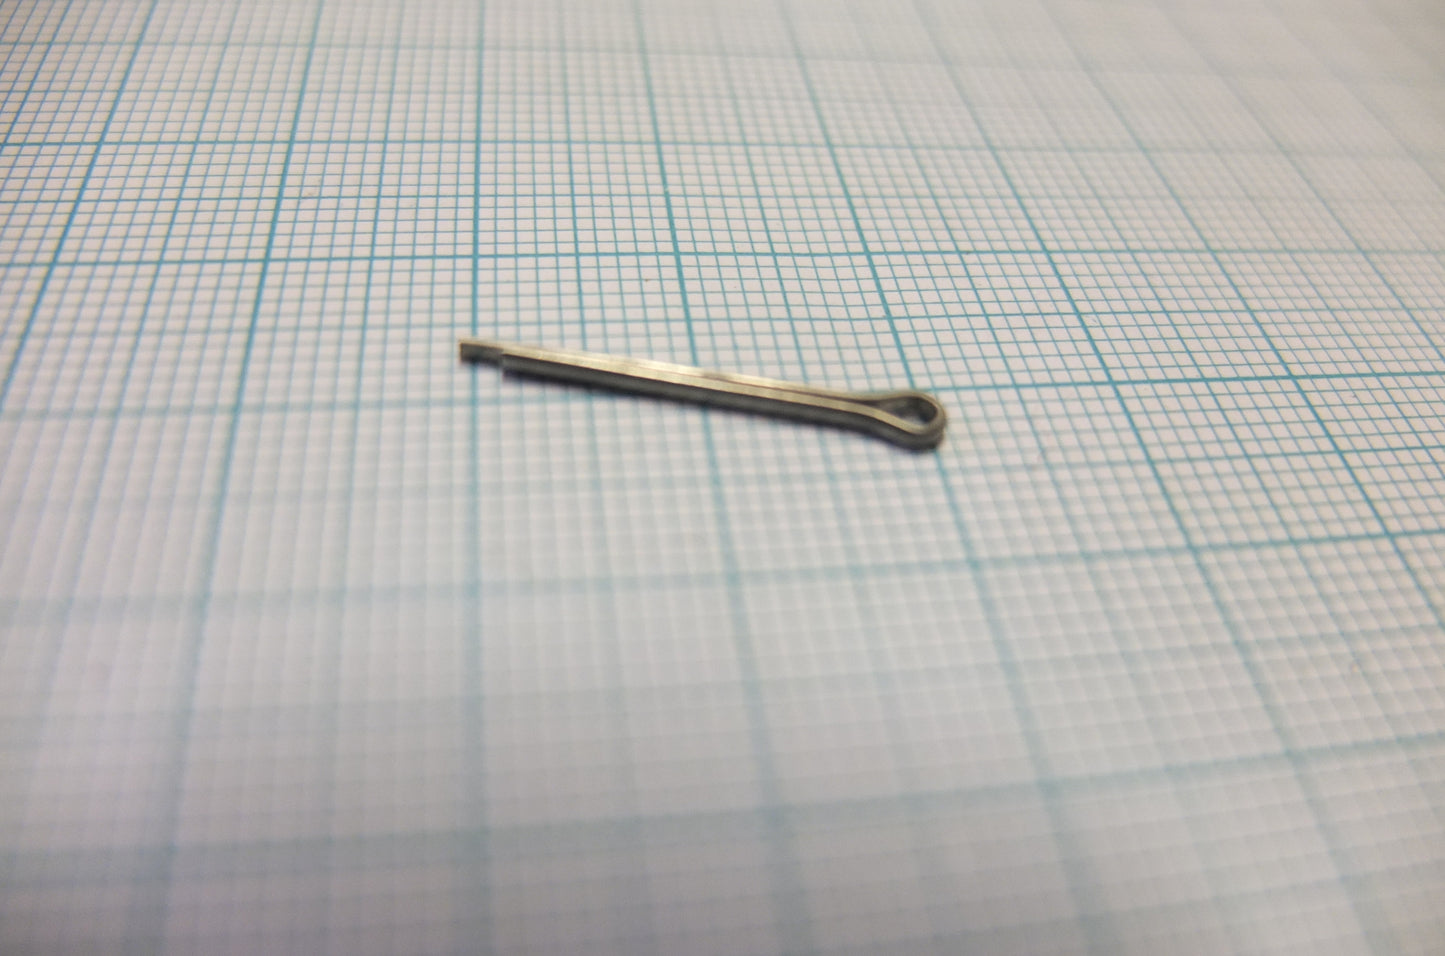 P1/048 Split pin